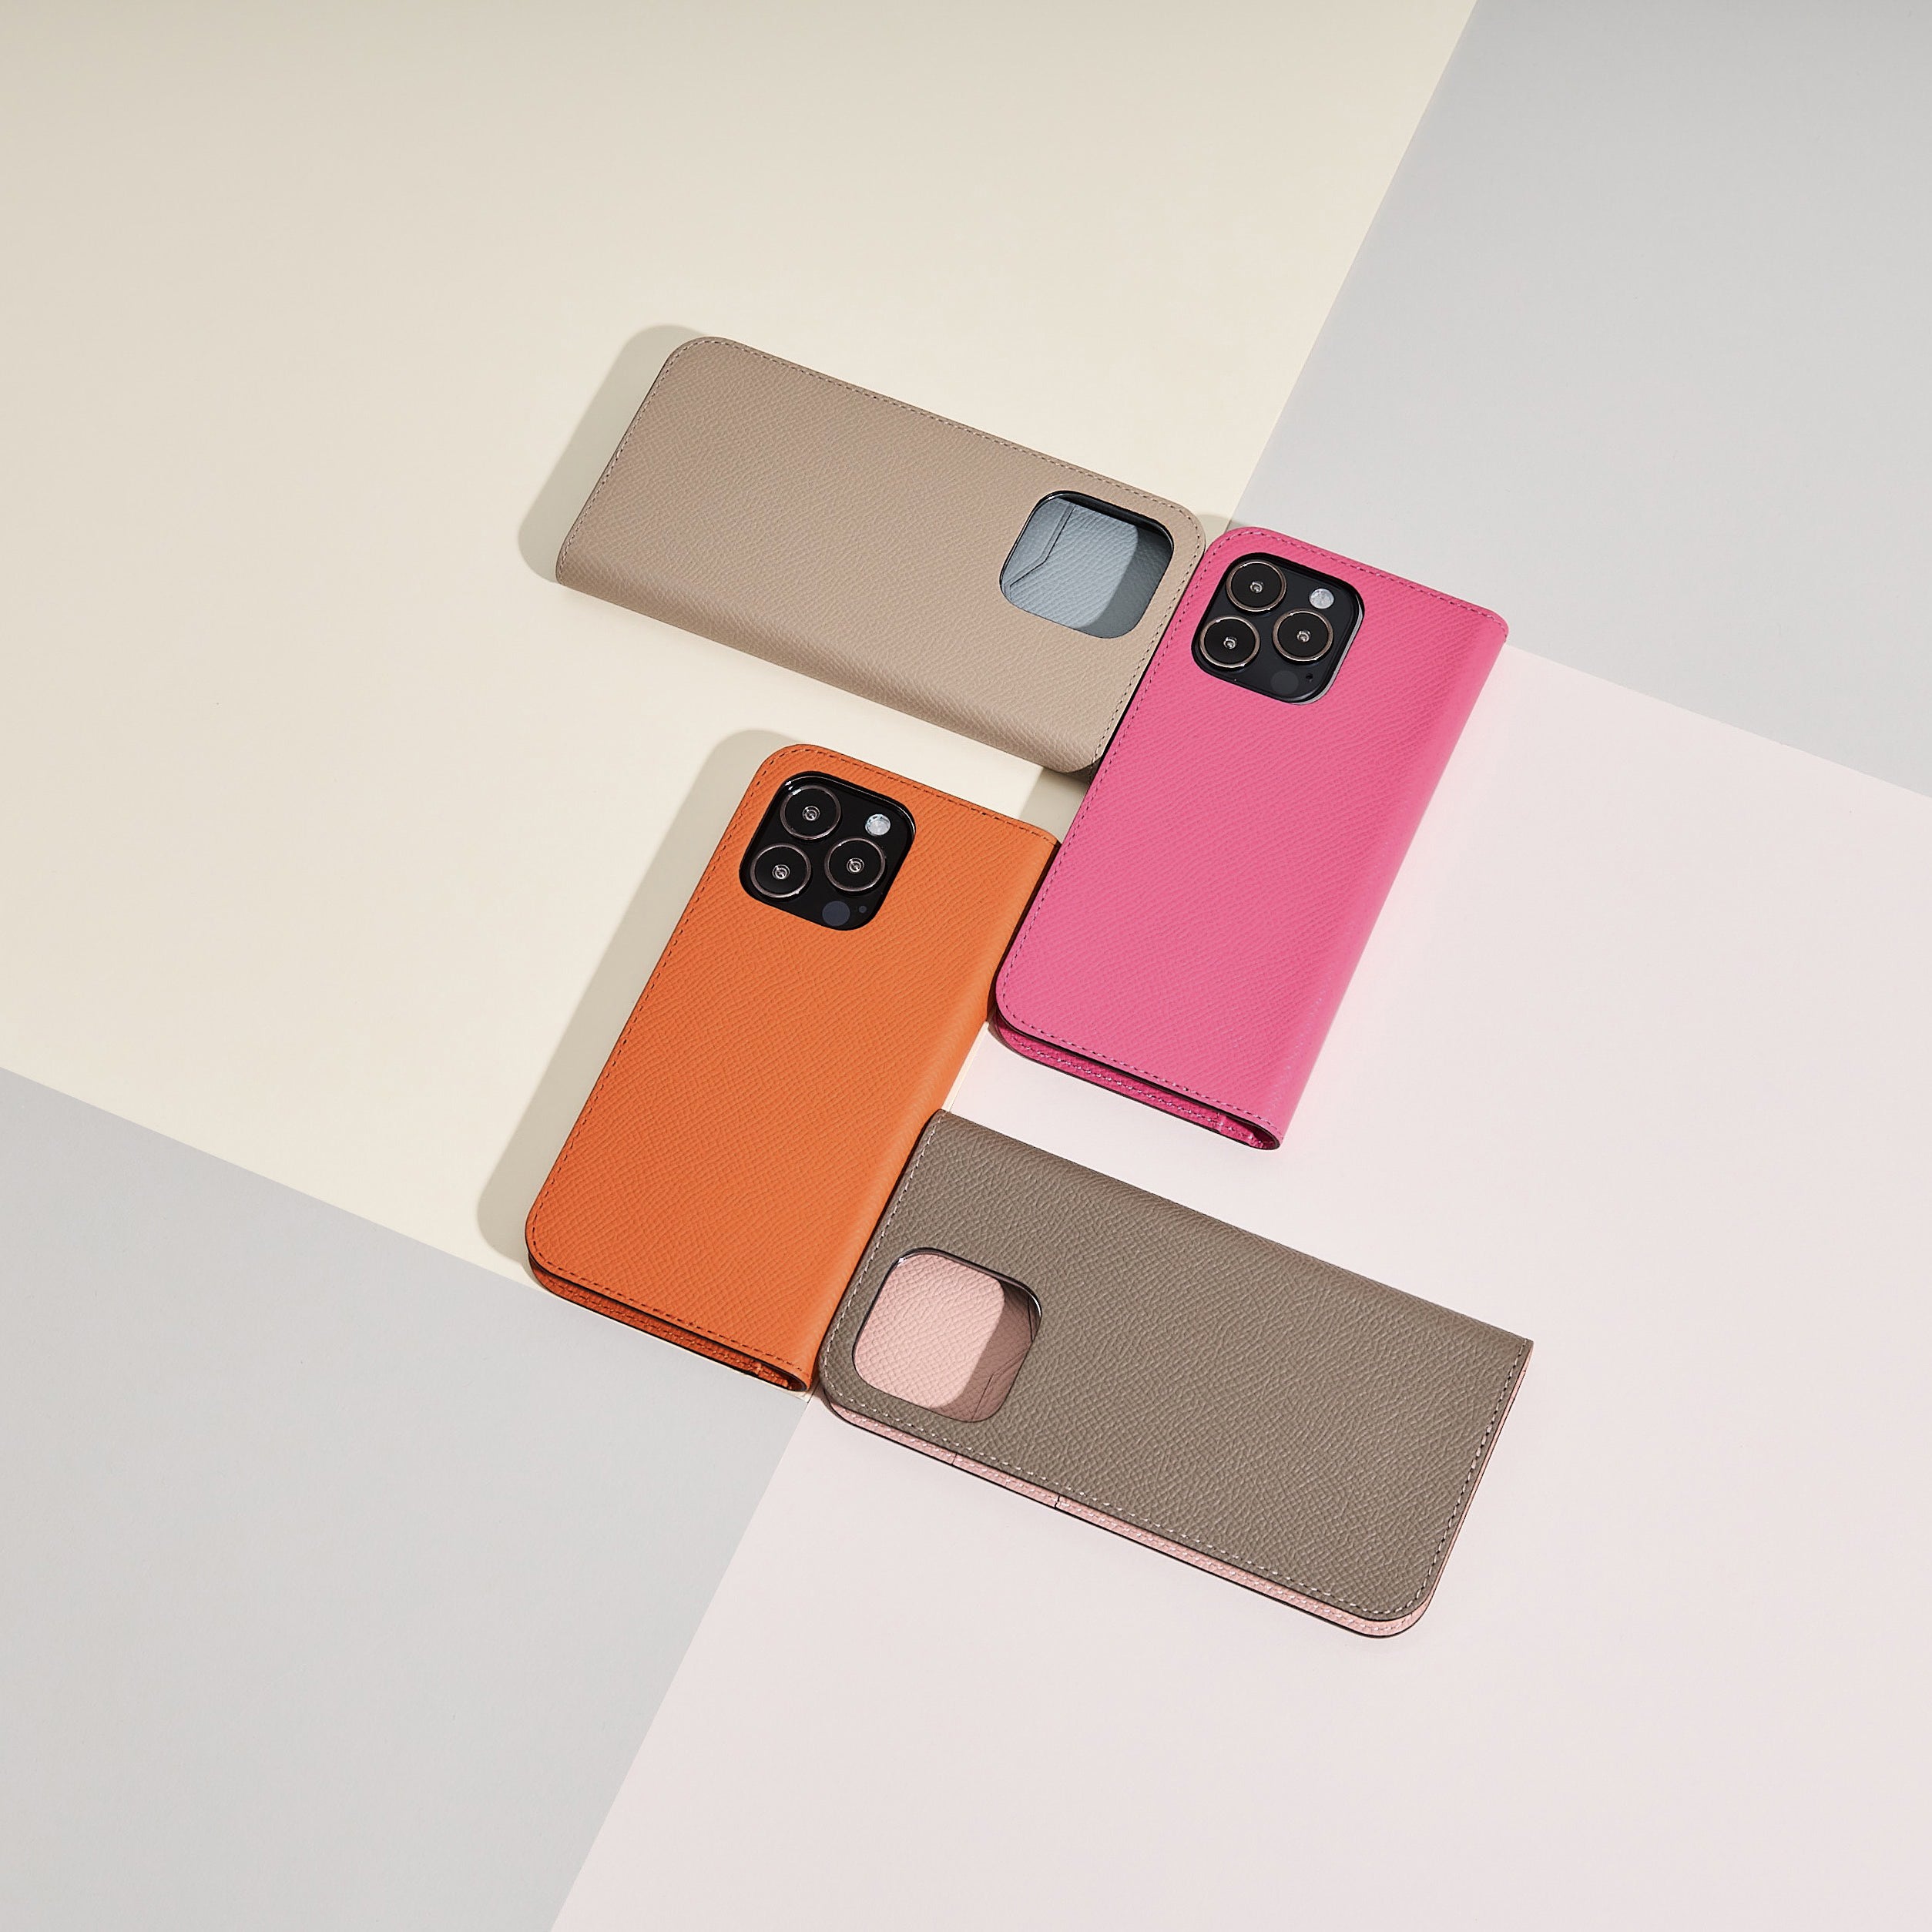 BONAVENTURA iPhone Diary Cases aus Noblessa-Leder in unterschiedlichen edlen Farbkombinationen.